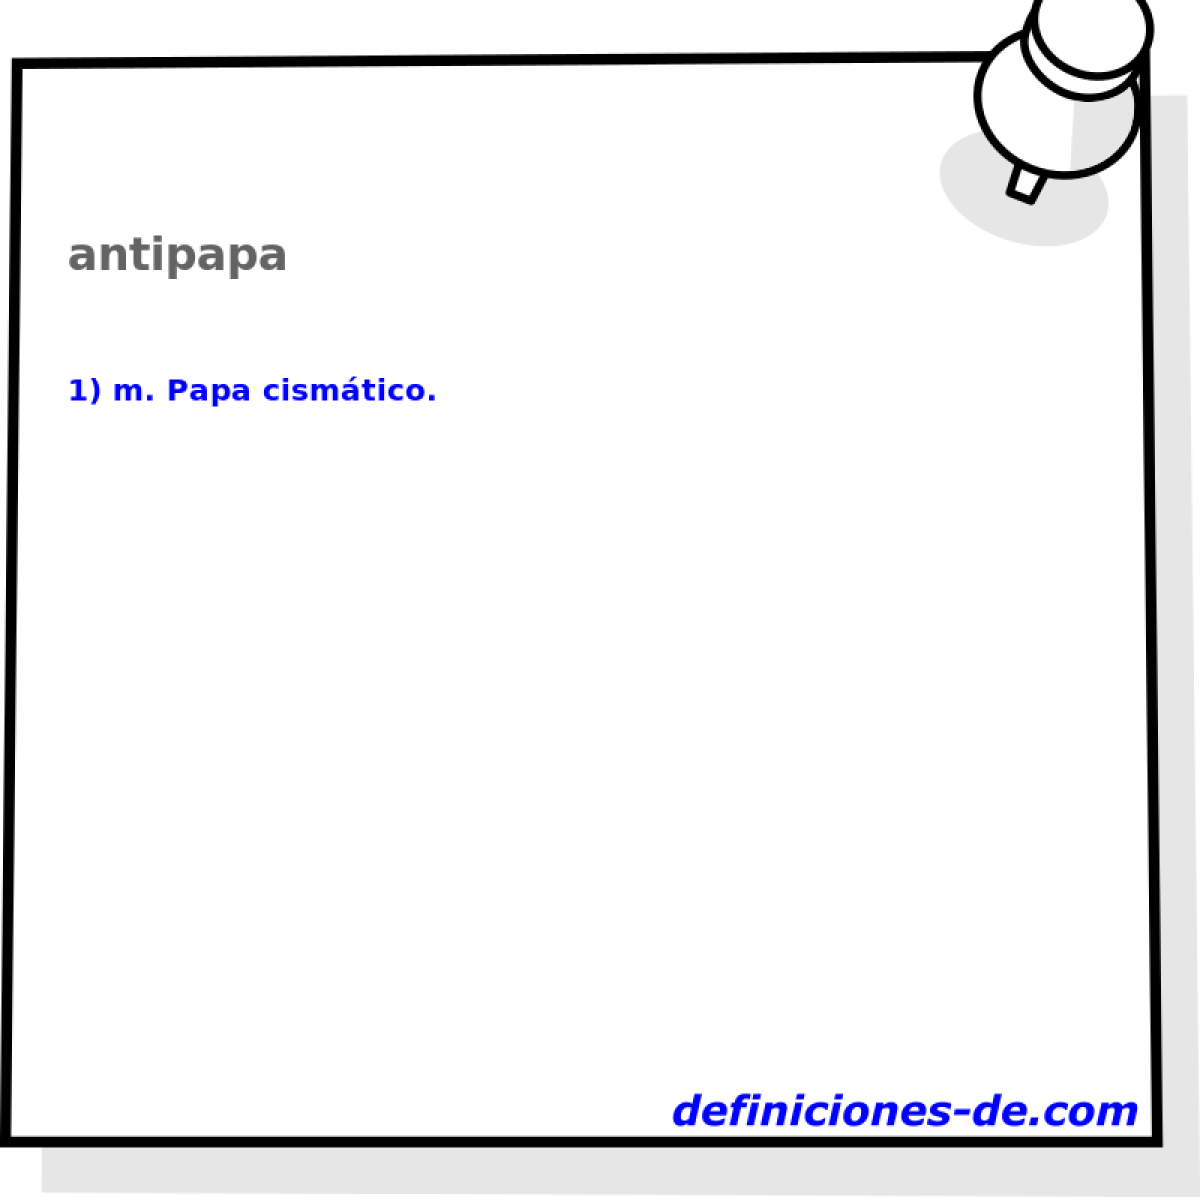 antipapa 